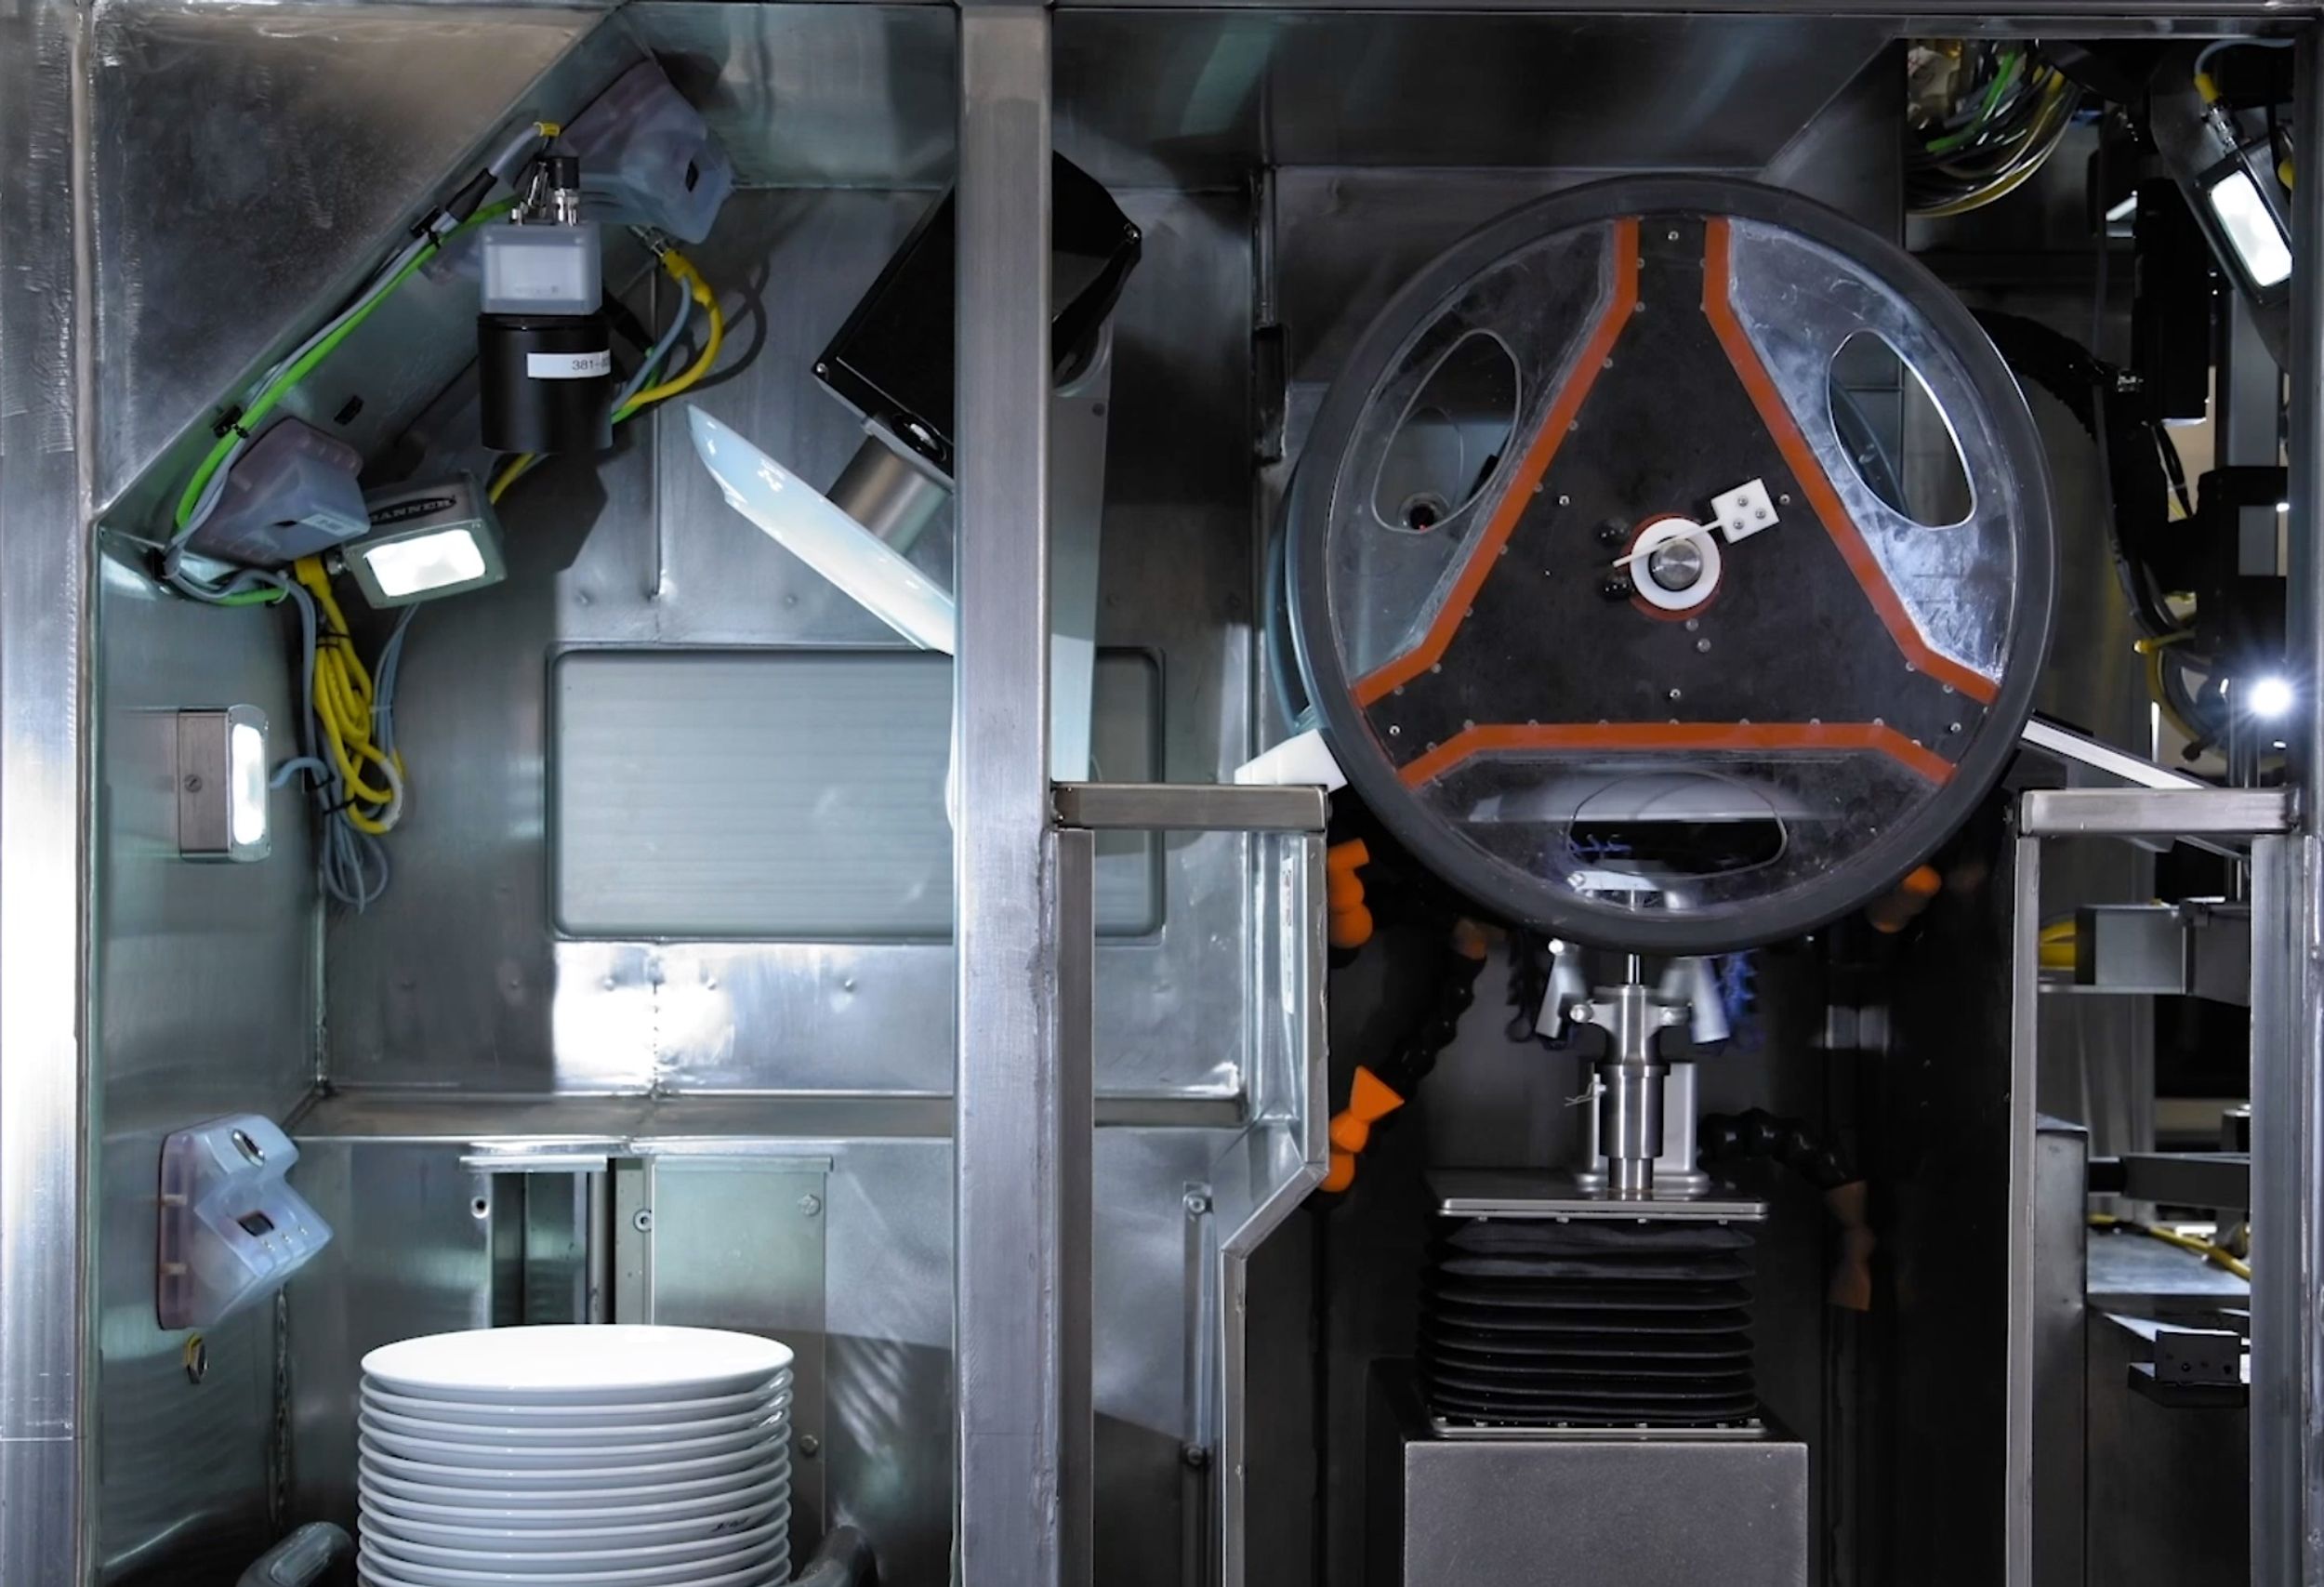 The Dishcraft Robotics dish washing robot system uses a robotic arm and AI